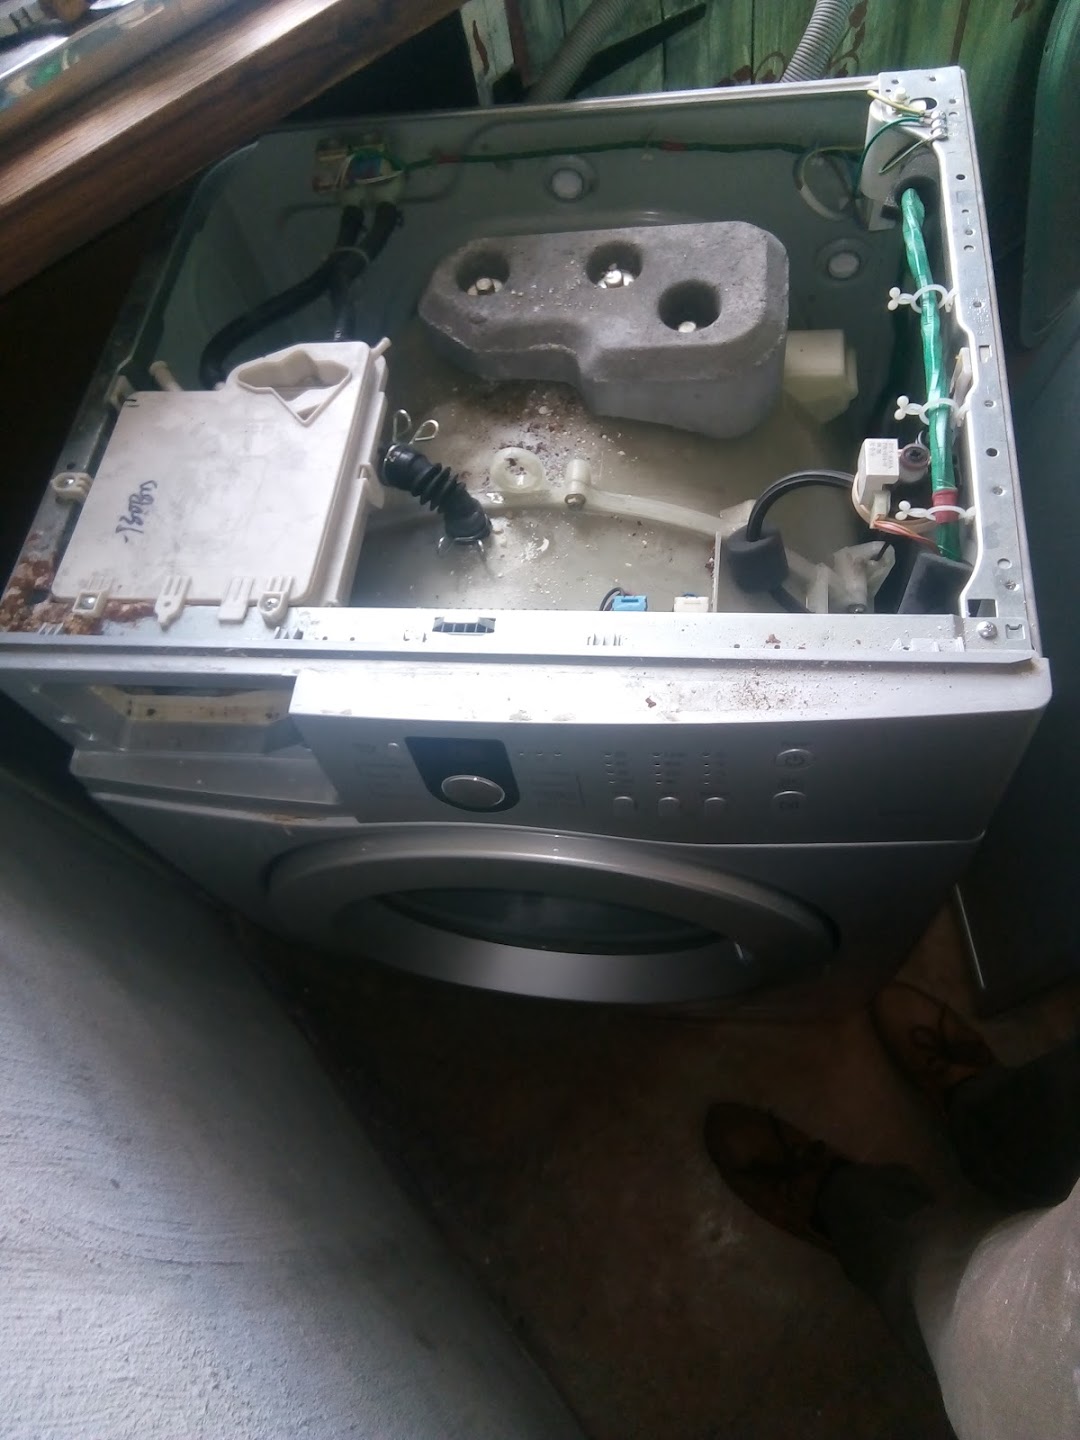 Net-Sonke home appliance repair